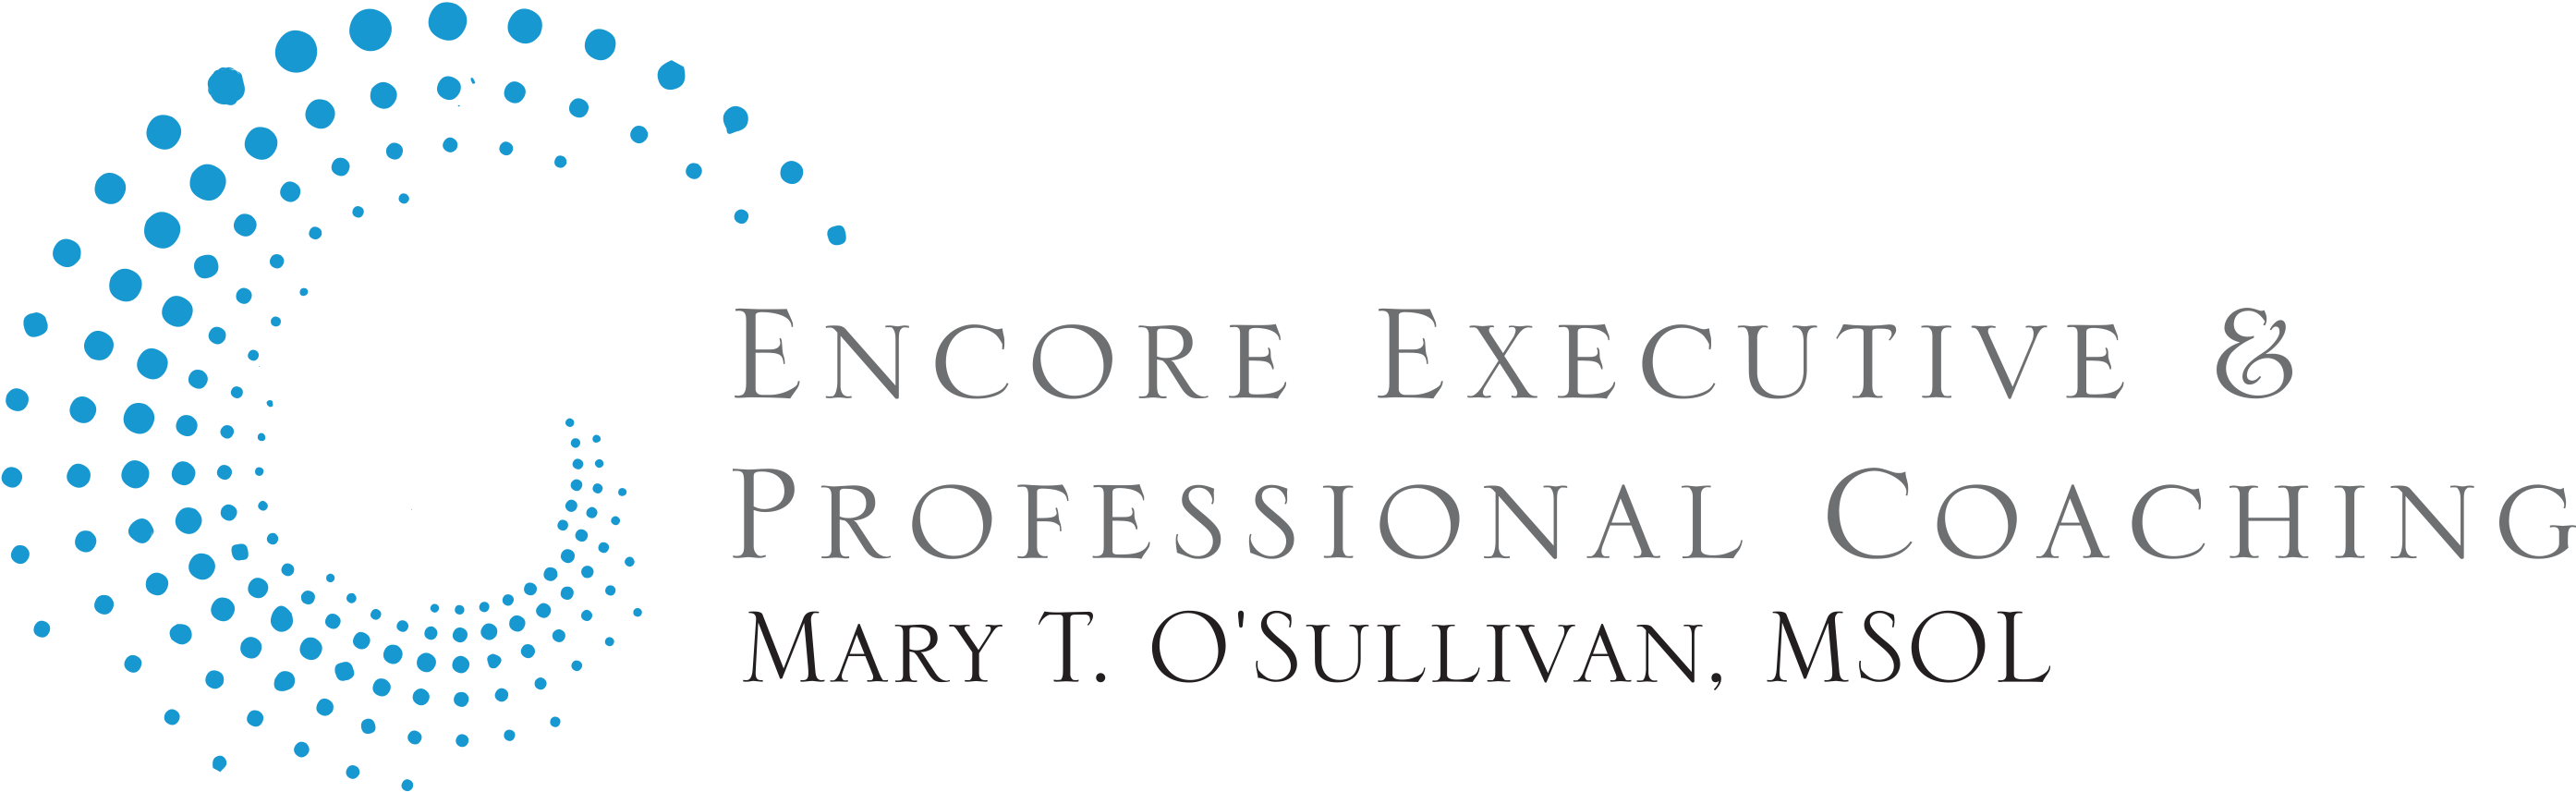 Encore Executive Coaching logo - Message Artist Creative Group